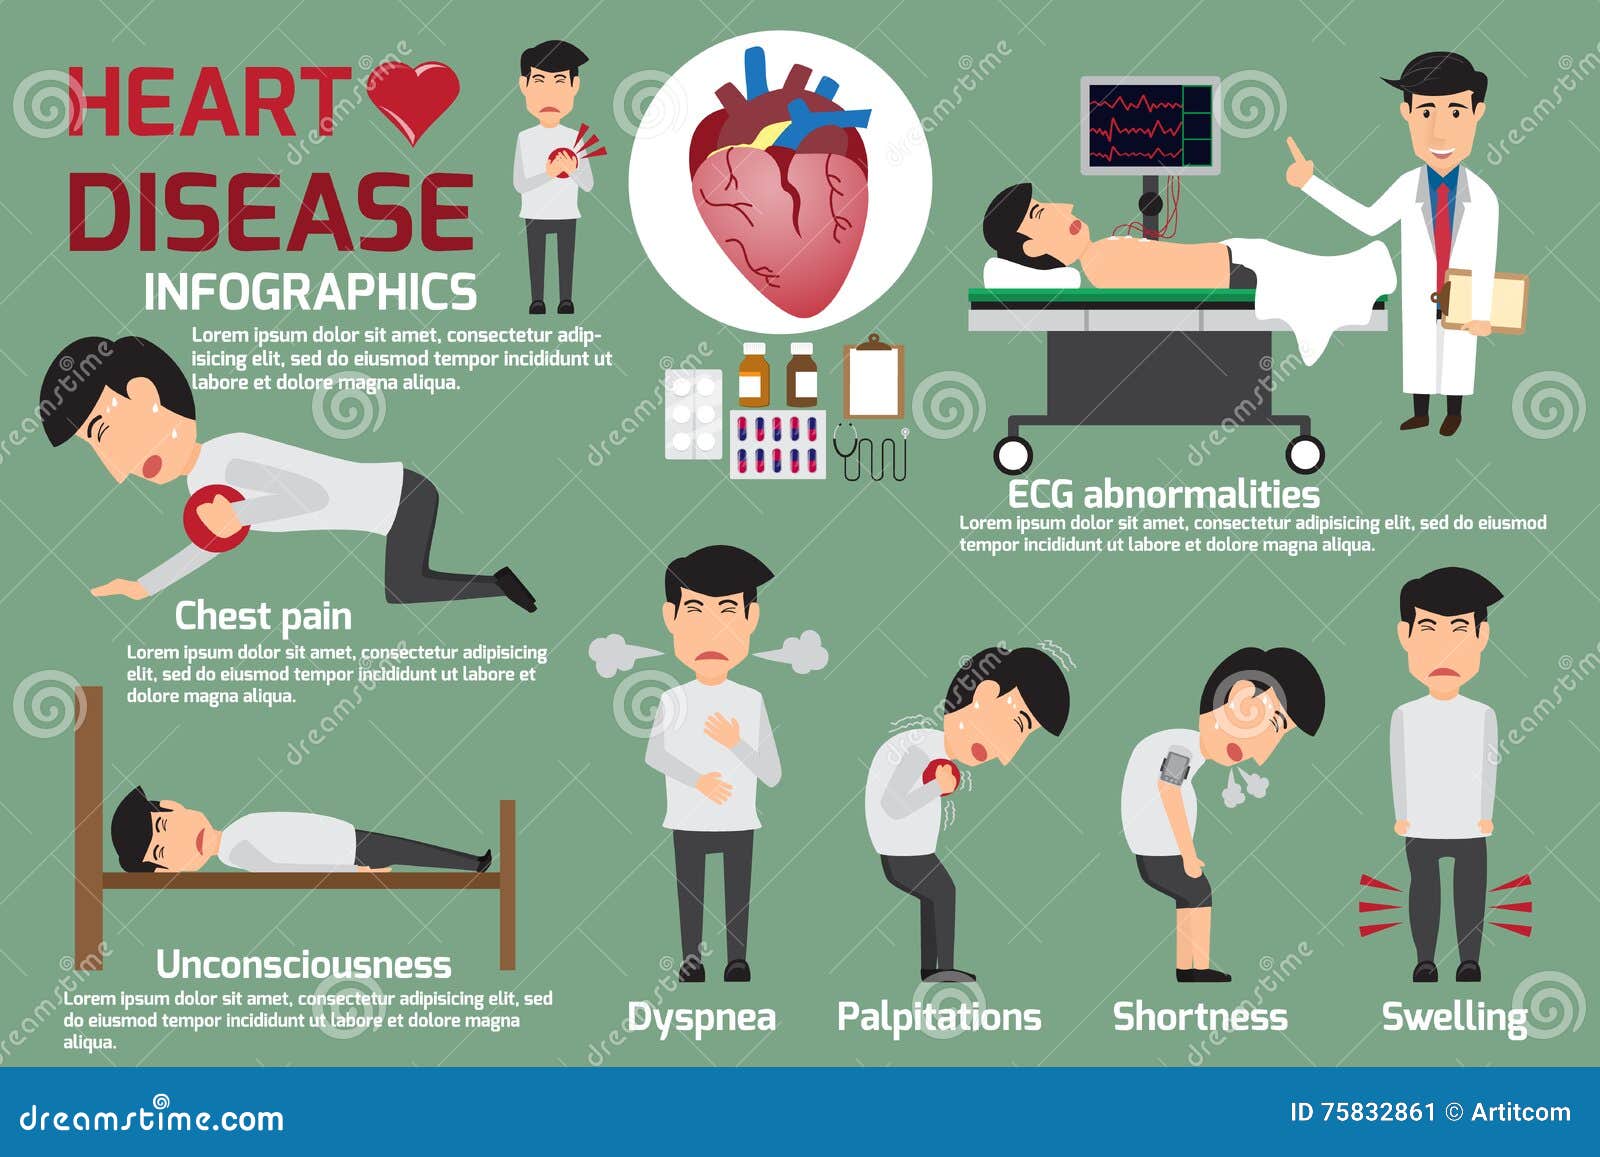 disease infographics. symptoms of heart disease and acute pain p